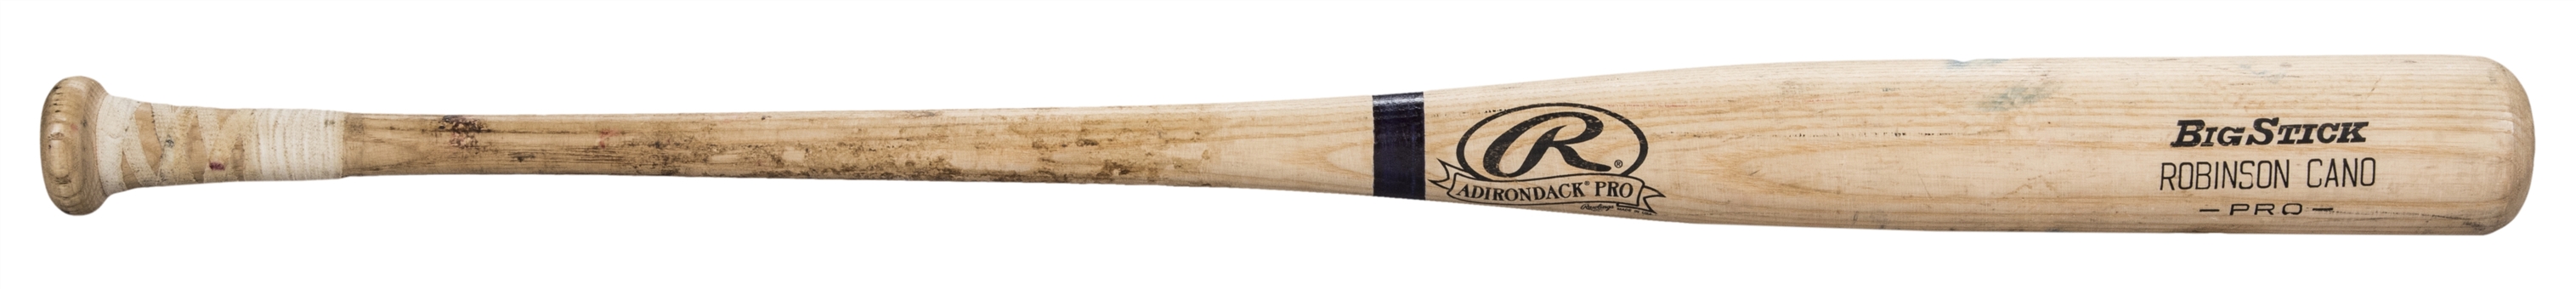 2009 Robinson Cano Game Used Rawlings 609B Model Bat (PSA/DNA)